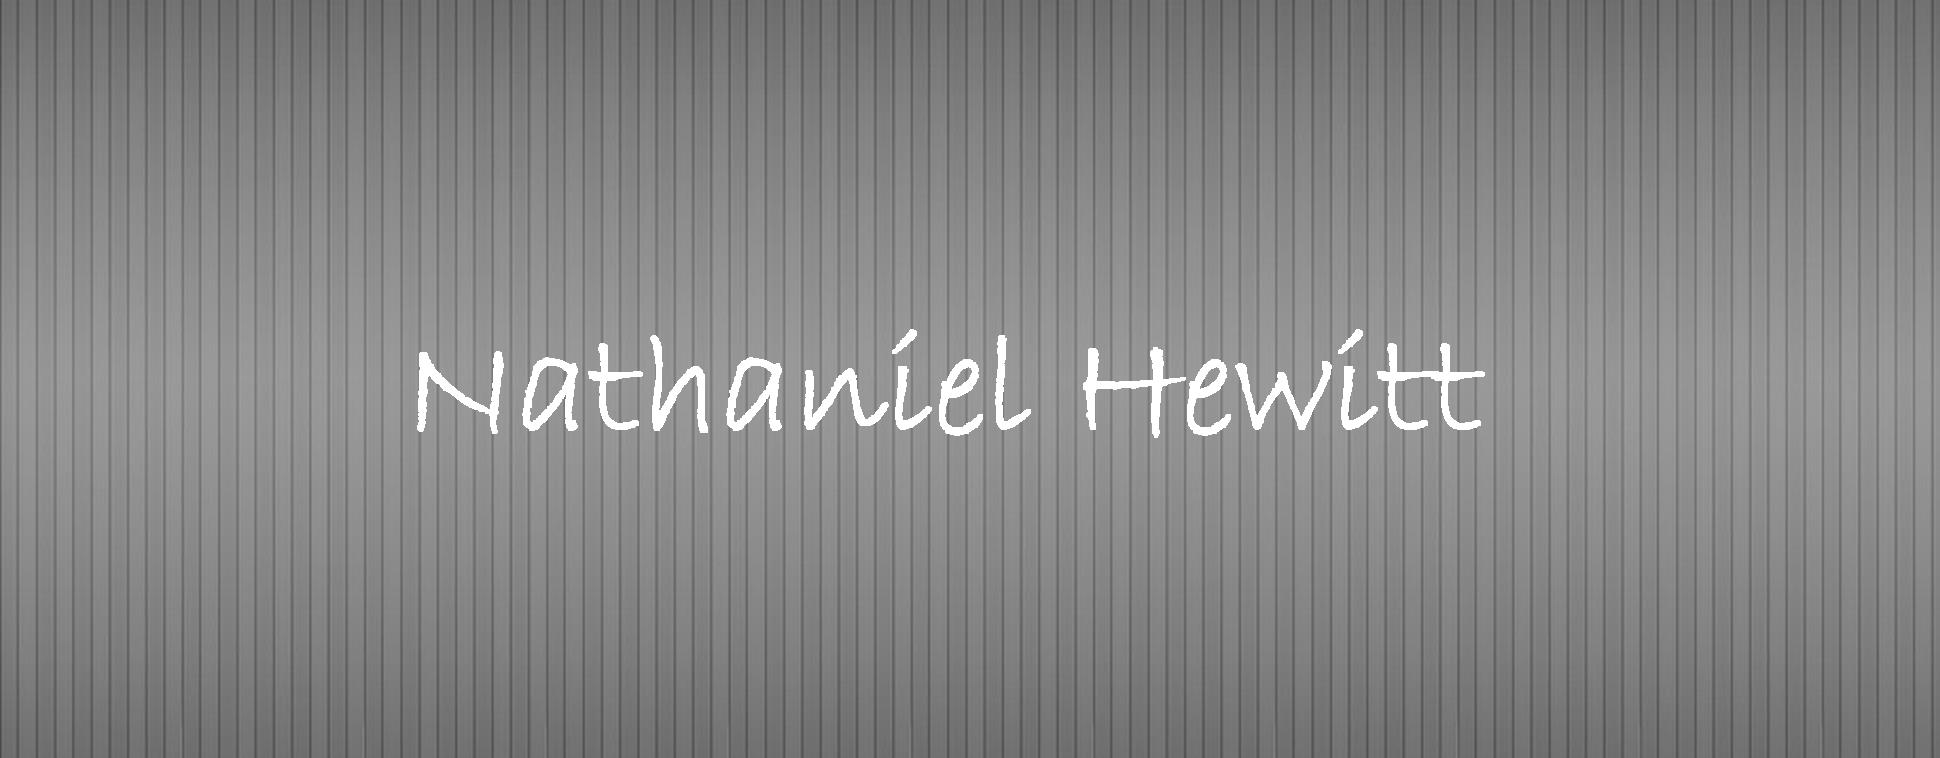 Nathaniel Hewett.jpg